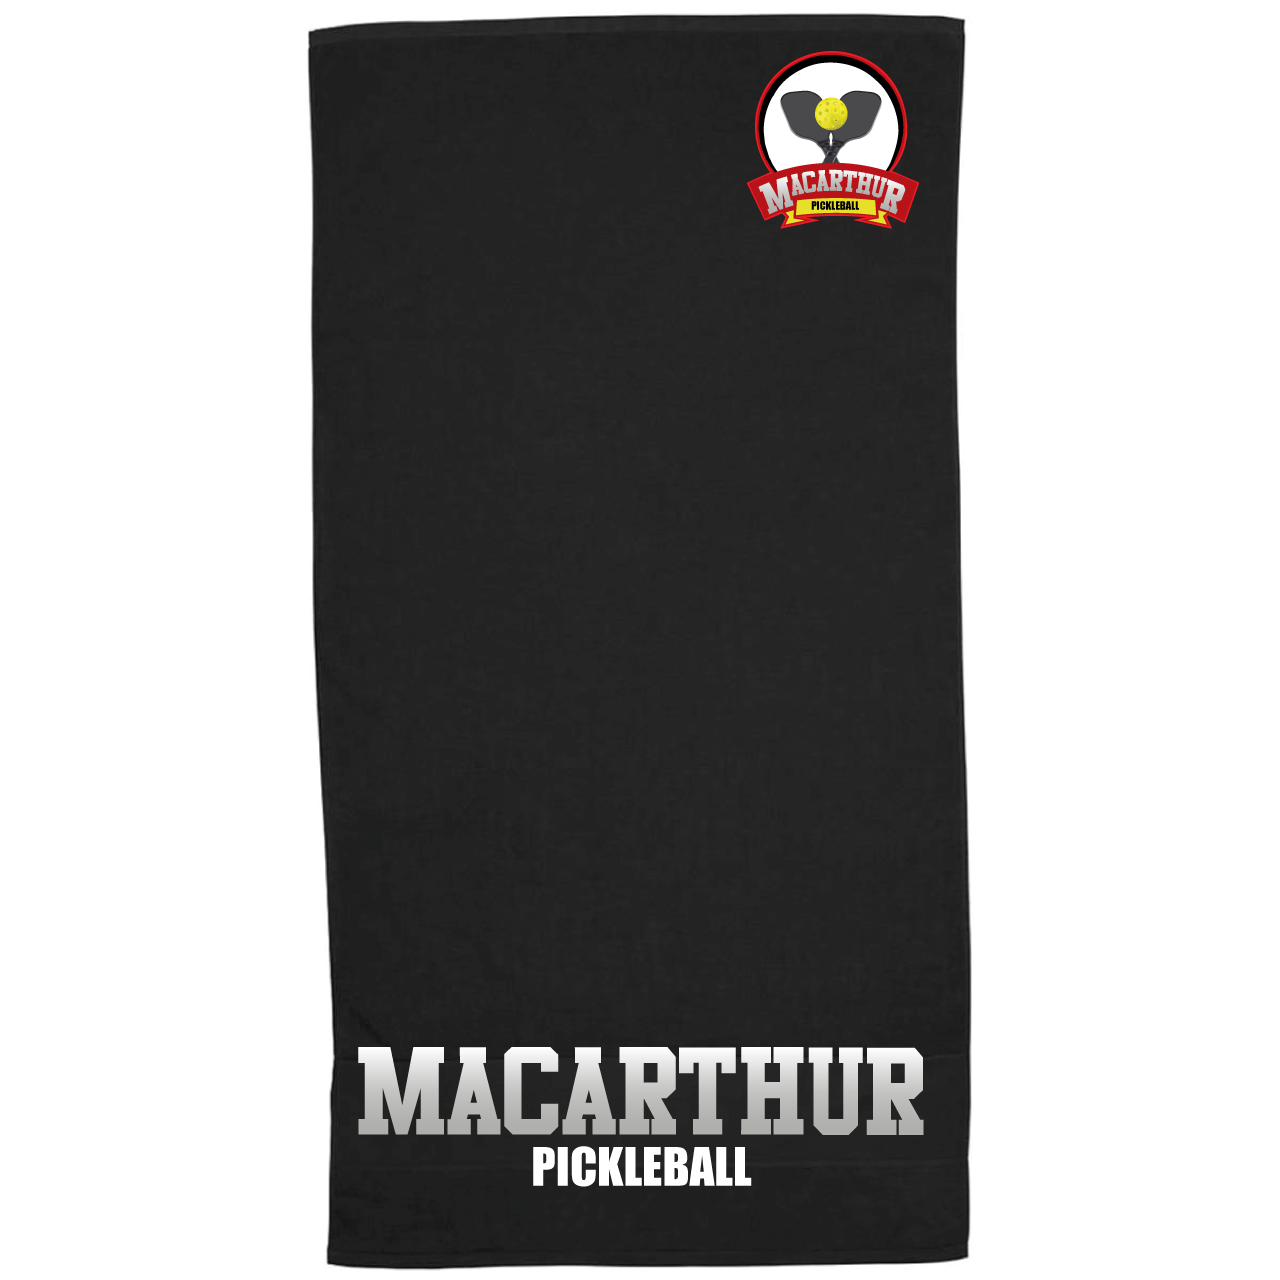 MACARTHUR PICKLEBALL - Towel B